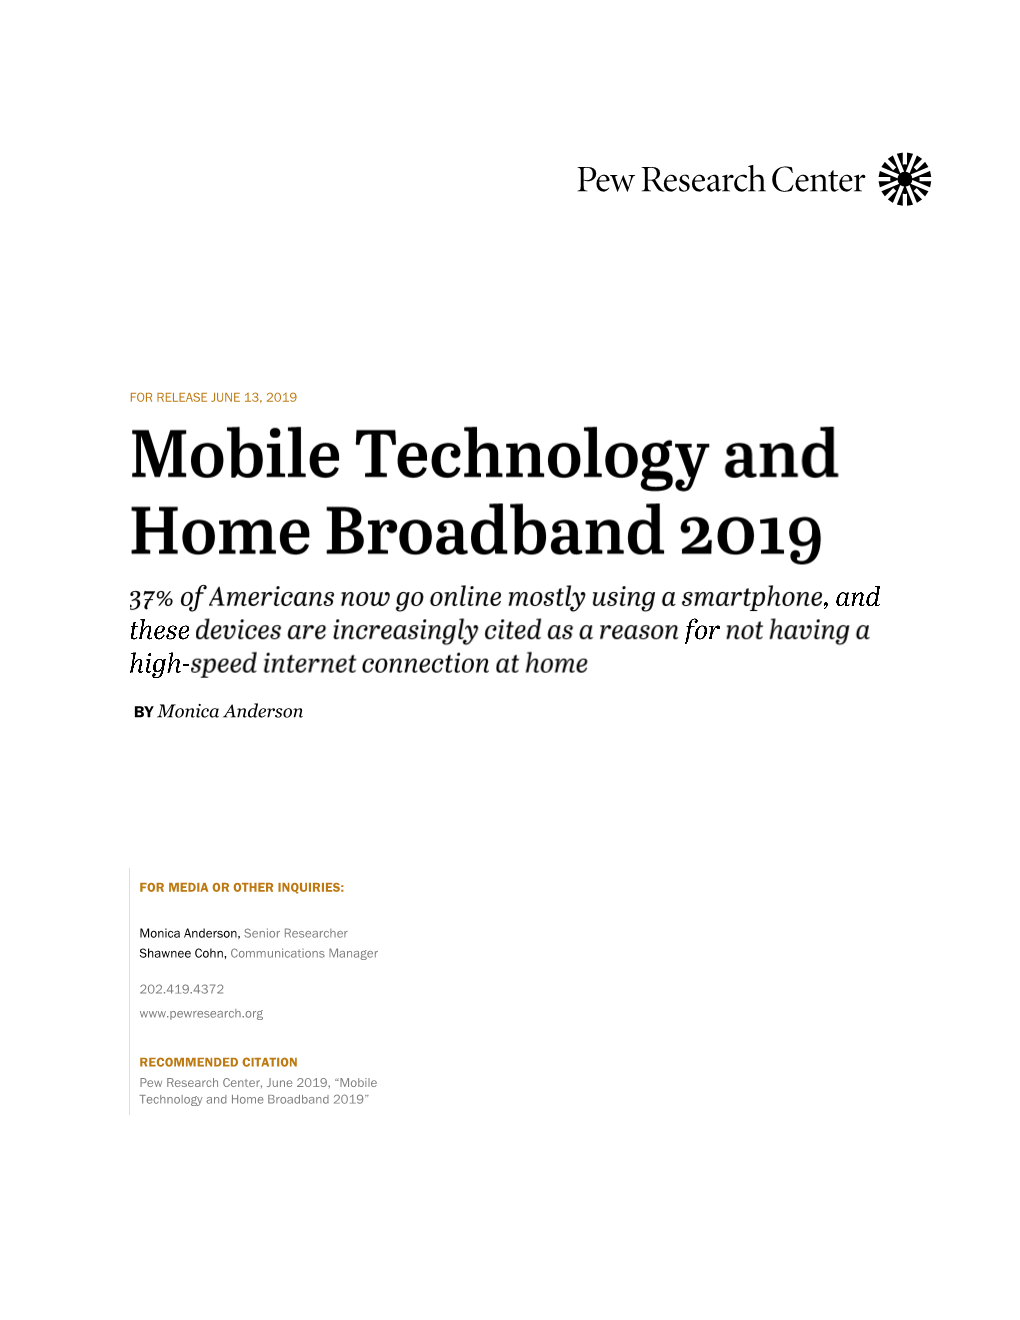 Mobile Technology and Home Broadband 2019”